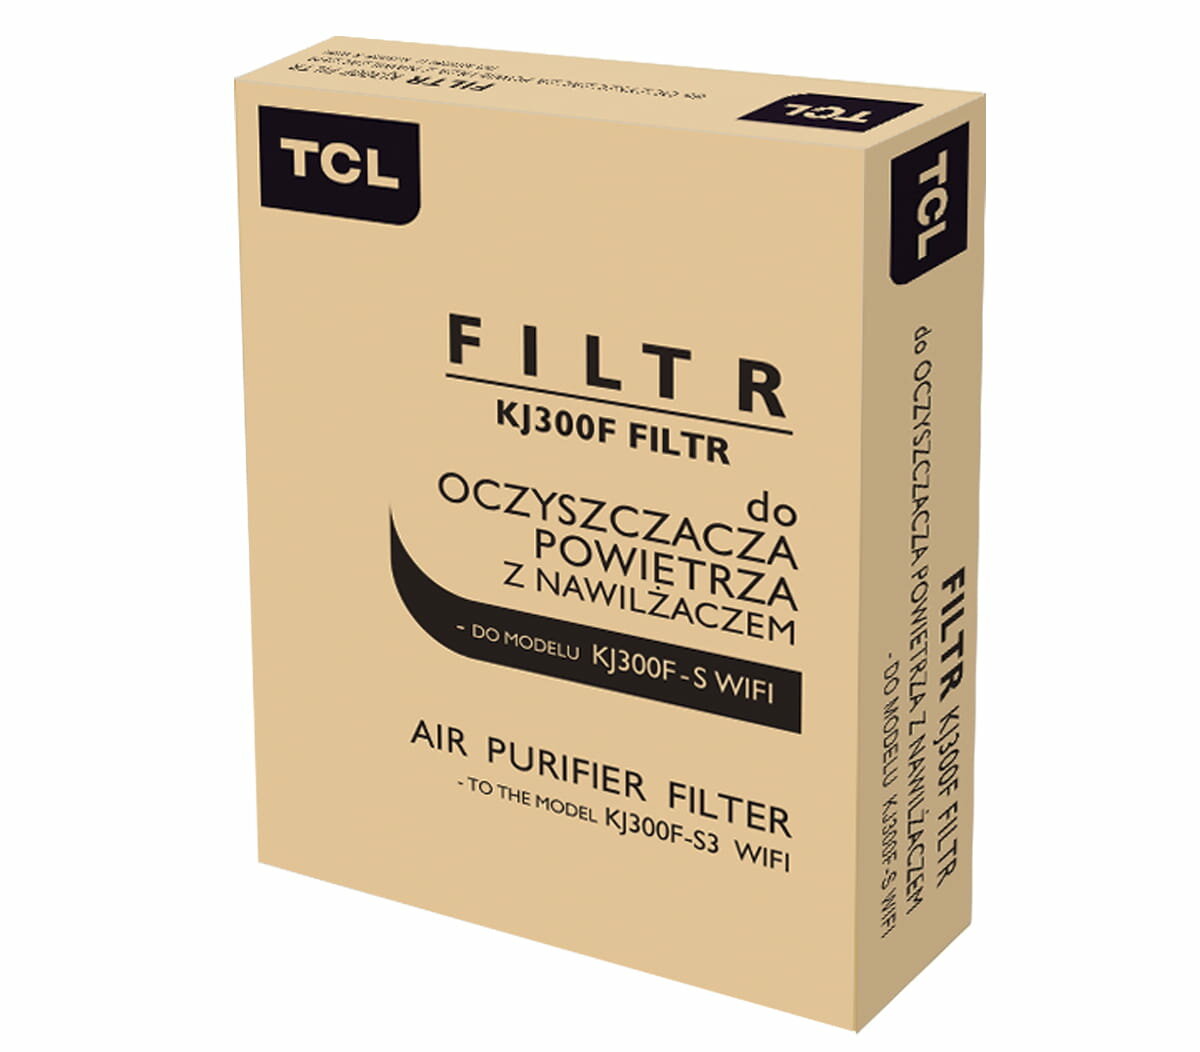 FILTR TCL KJ300F-S3 widok na opakowanie filtrów